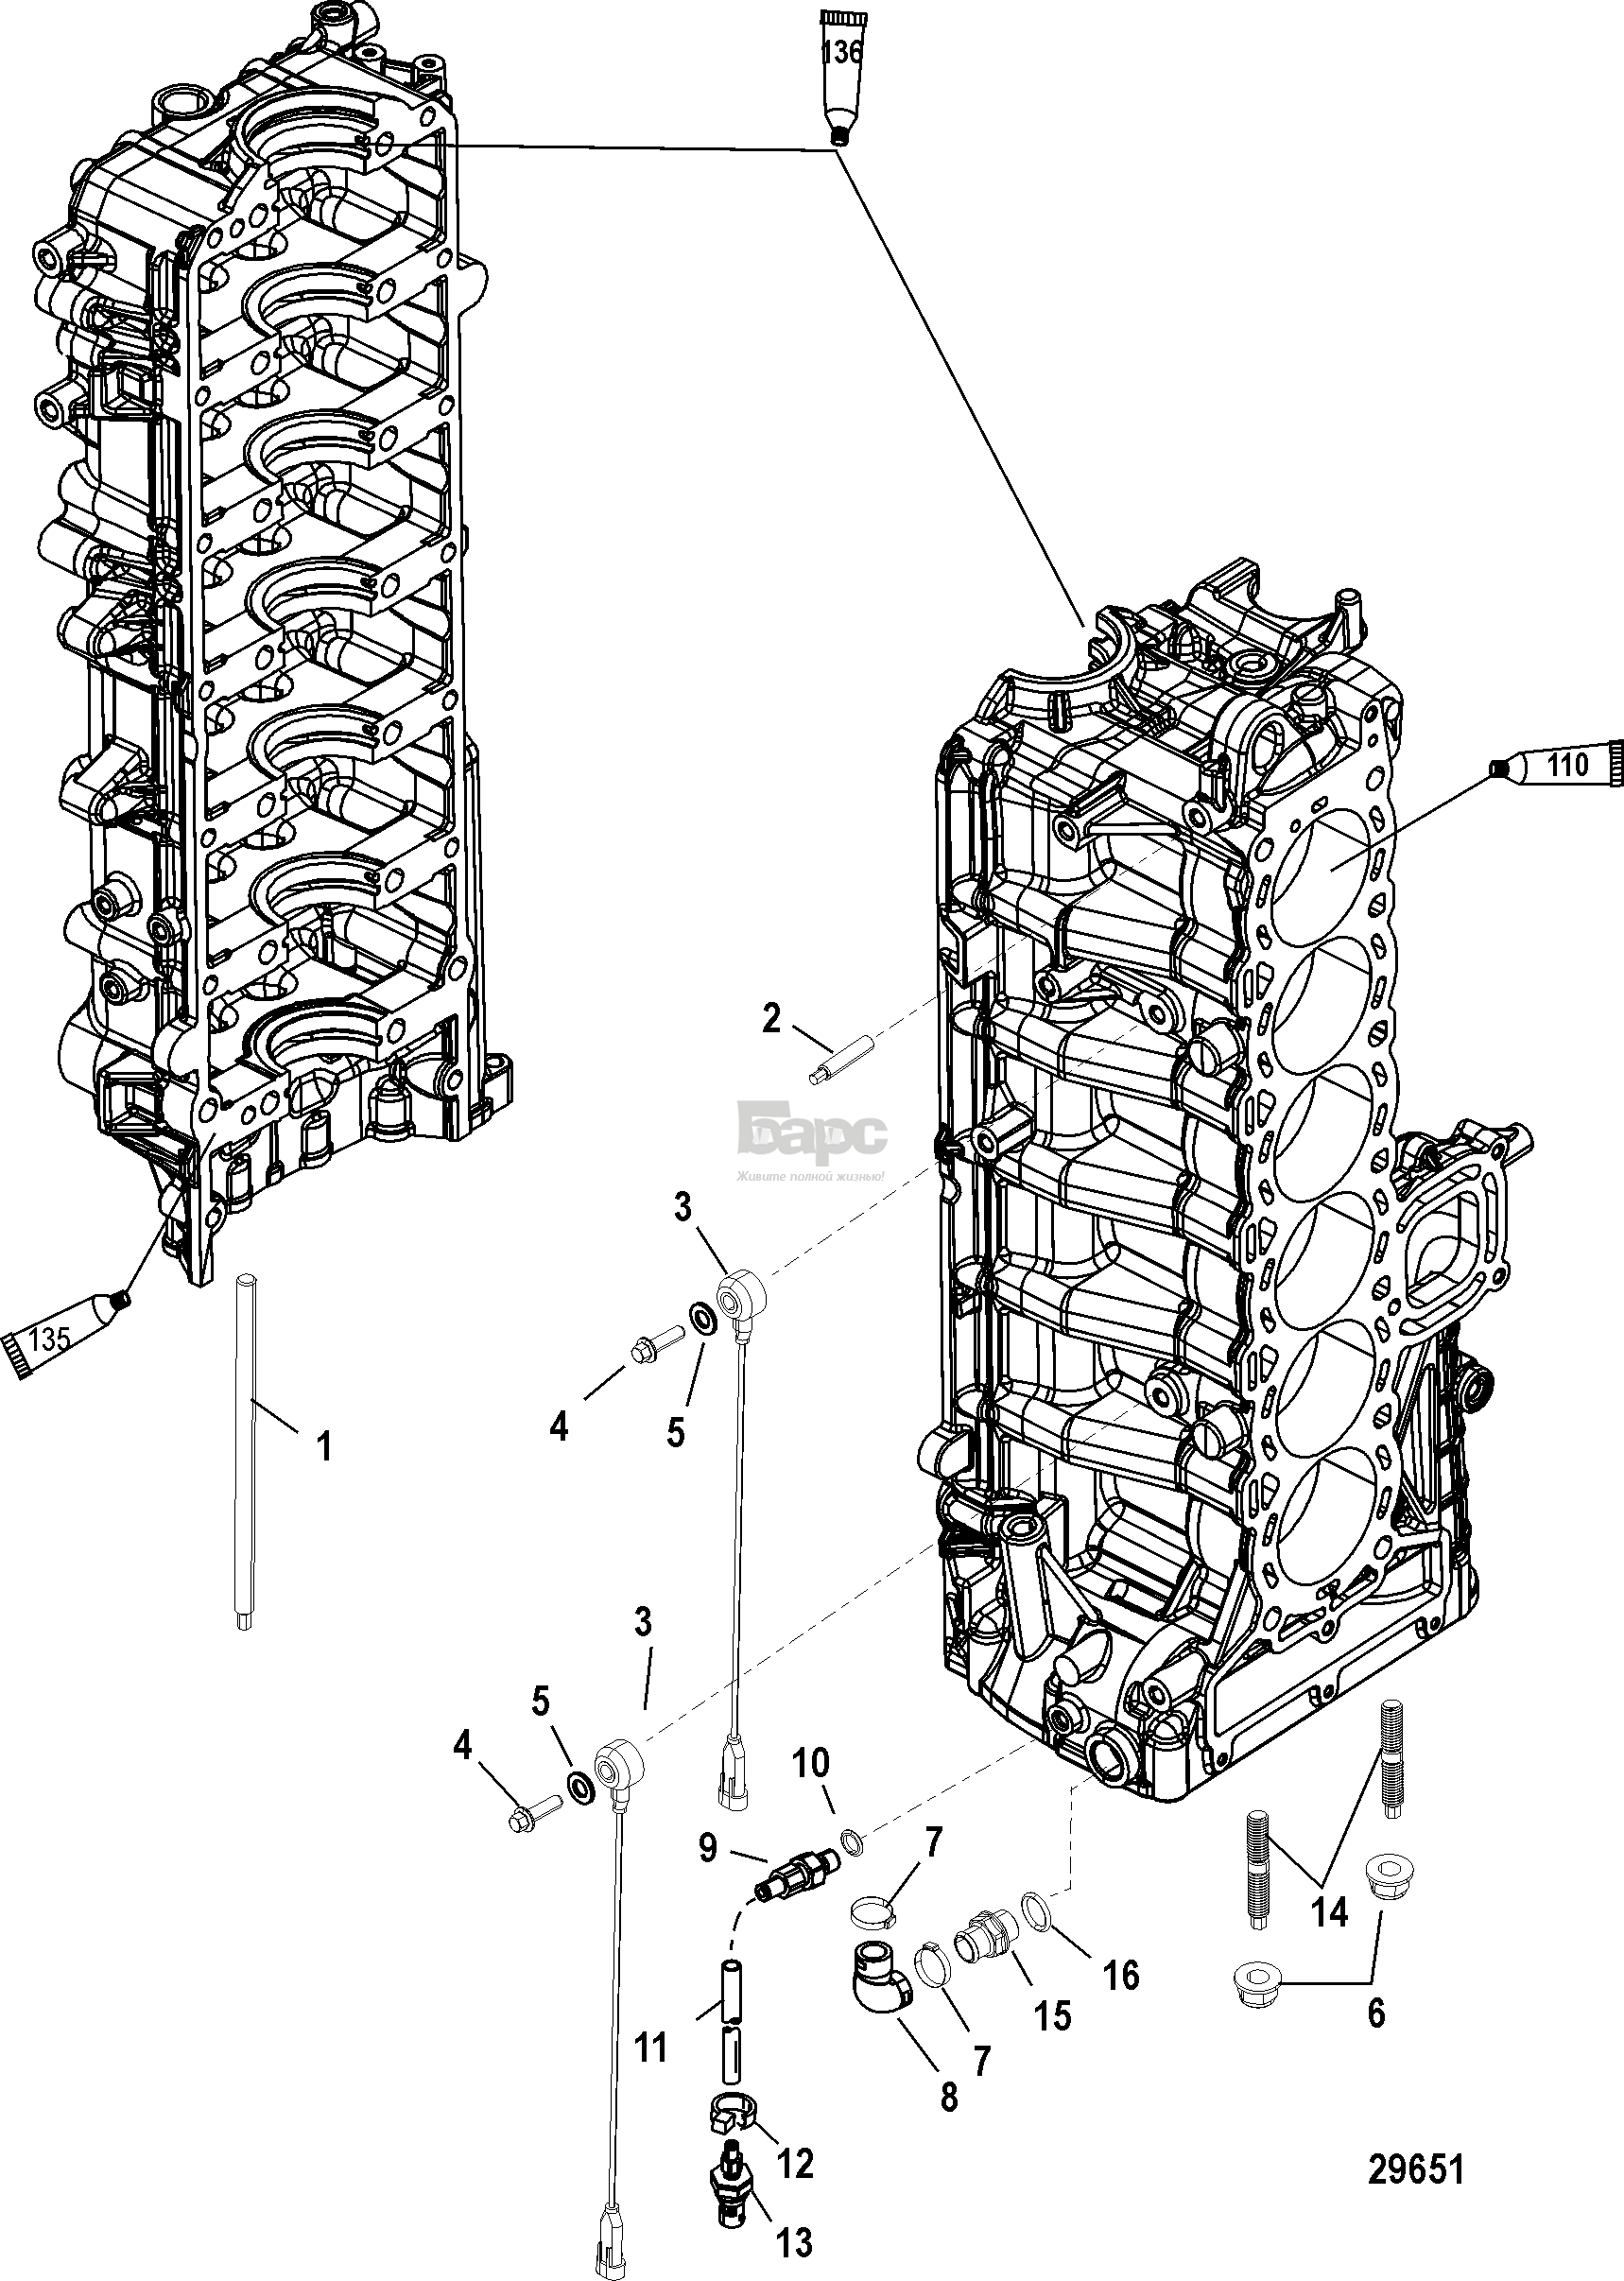 Port Cylinder Block Components